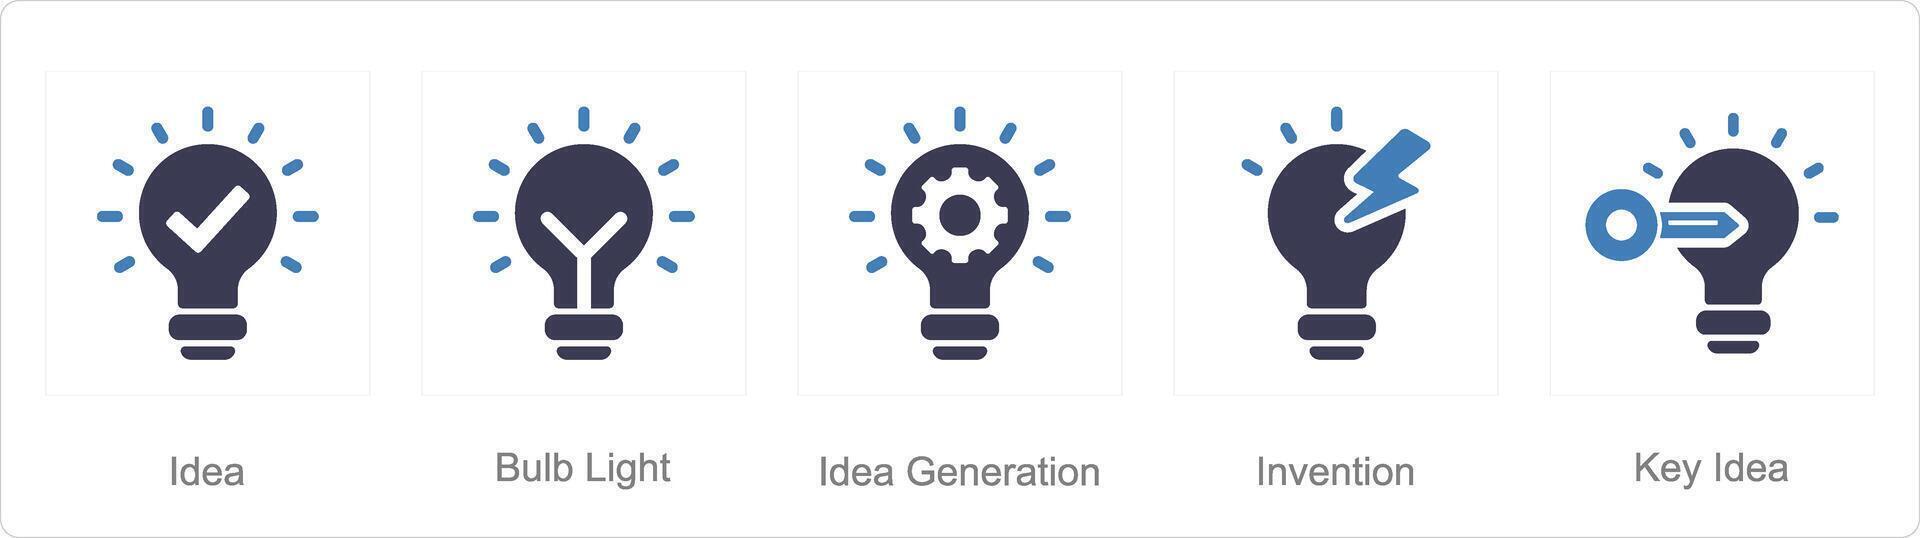 un conjunto de 5 5 idea íconos como idea, bulbo luz, idea Generacion vector